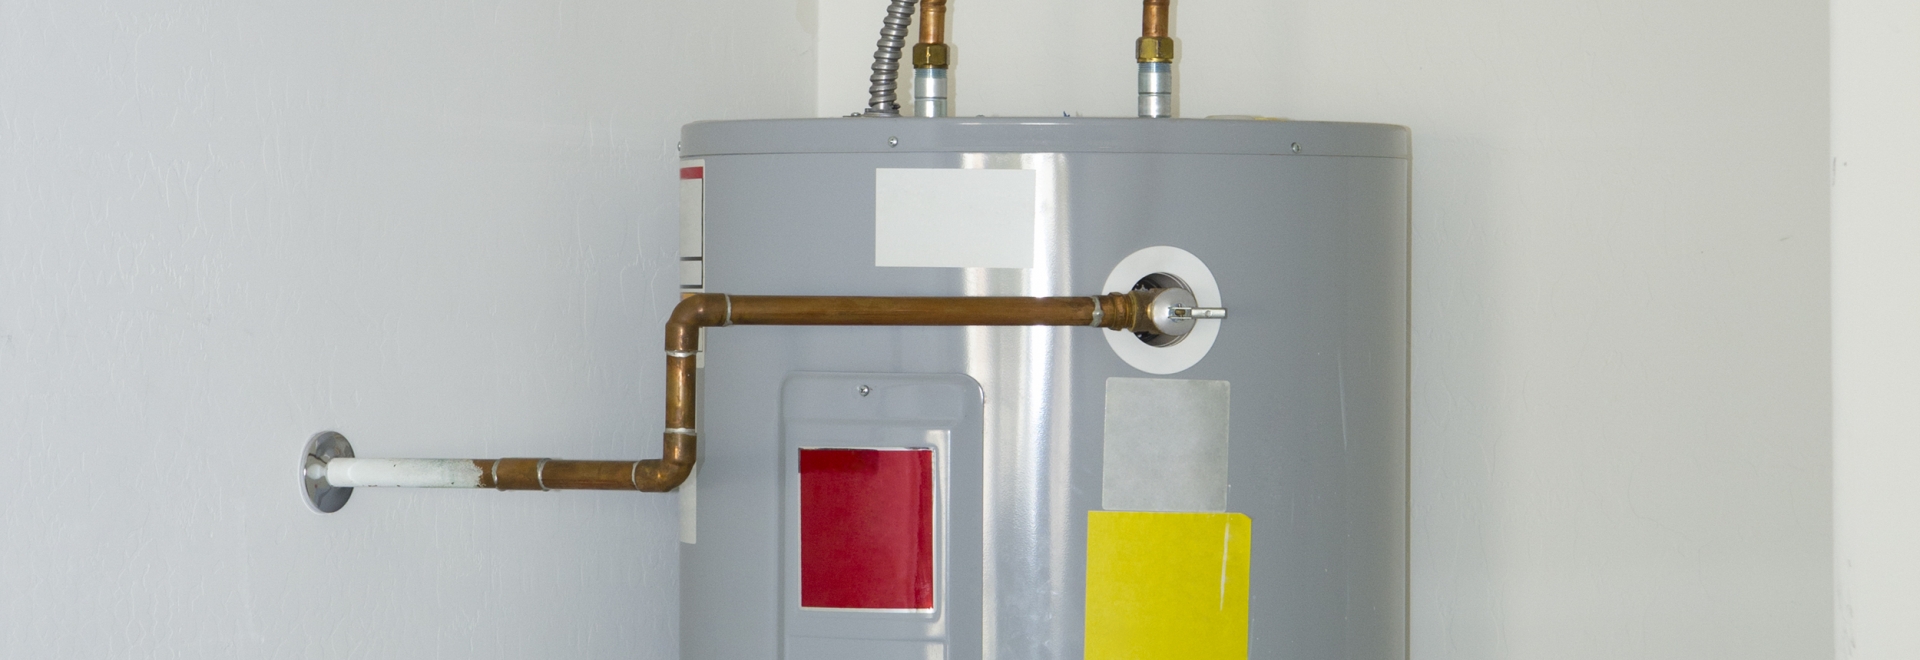 home water heater in basement